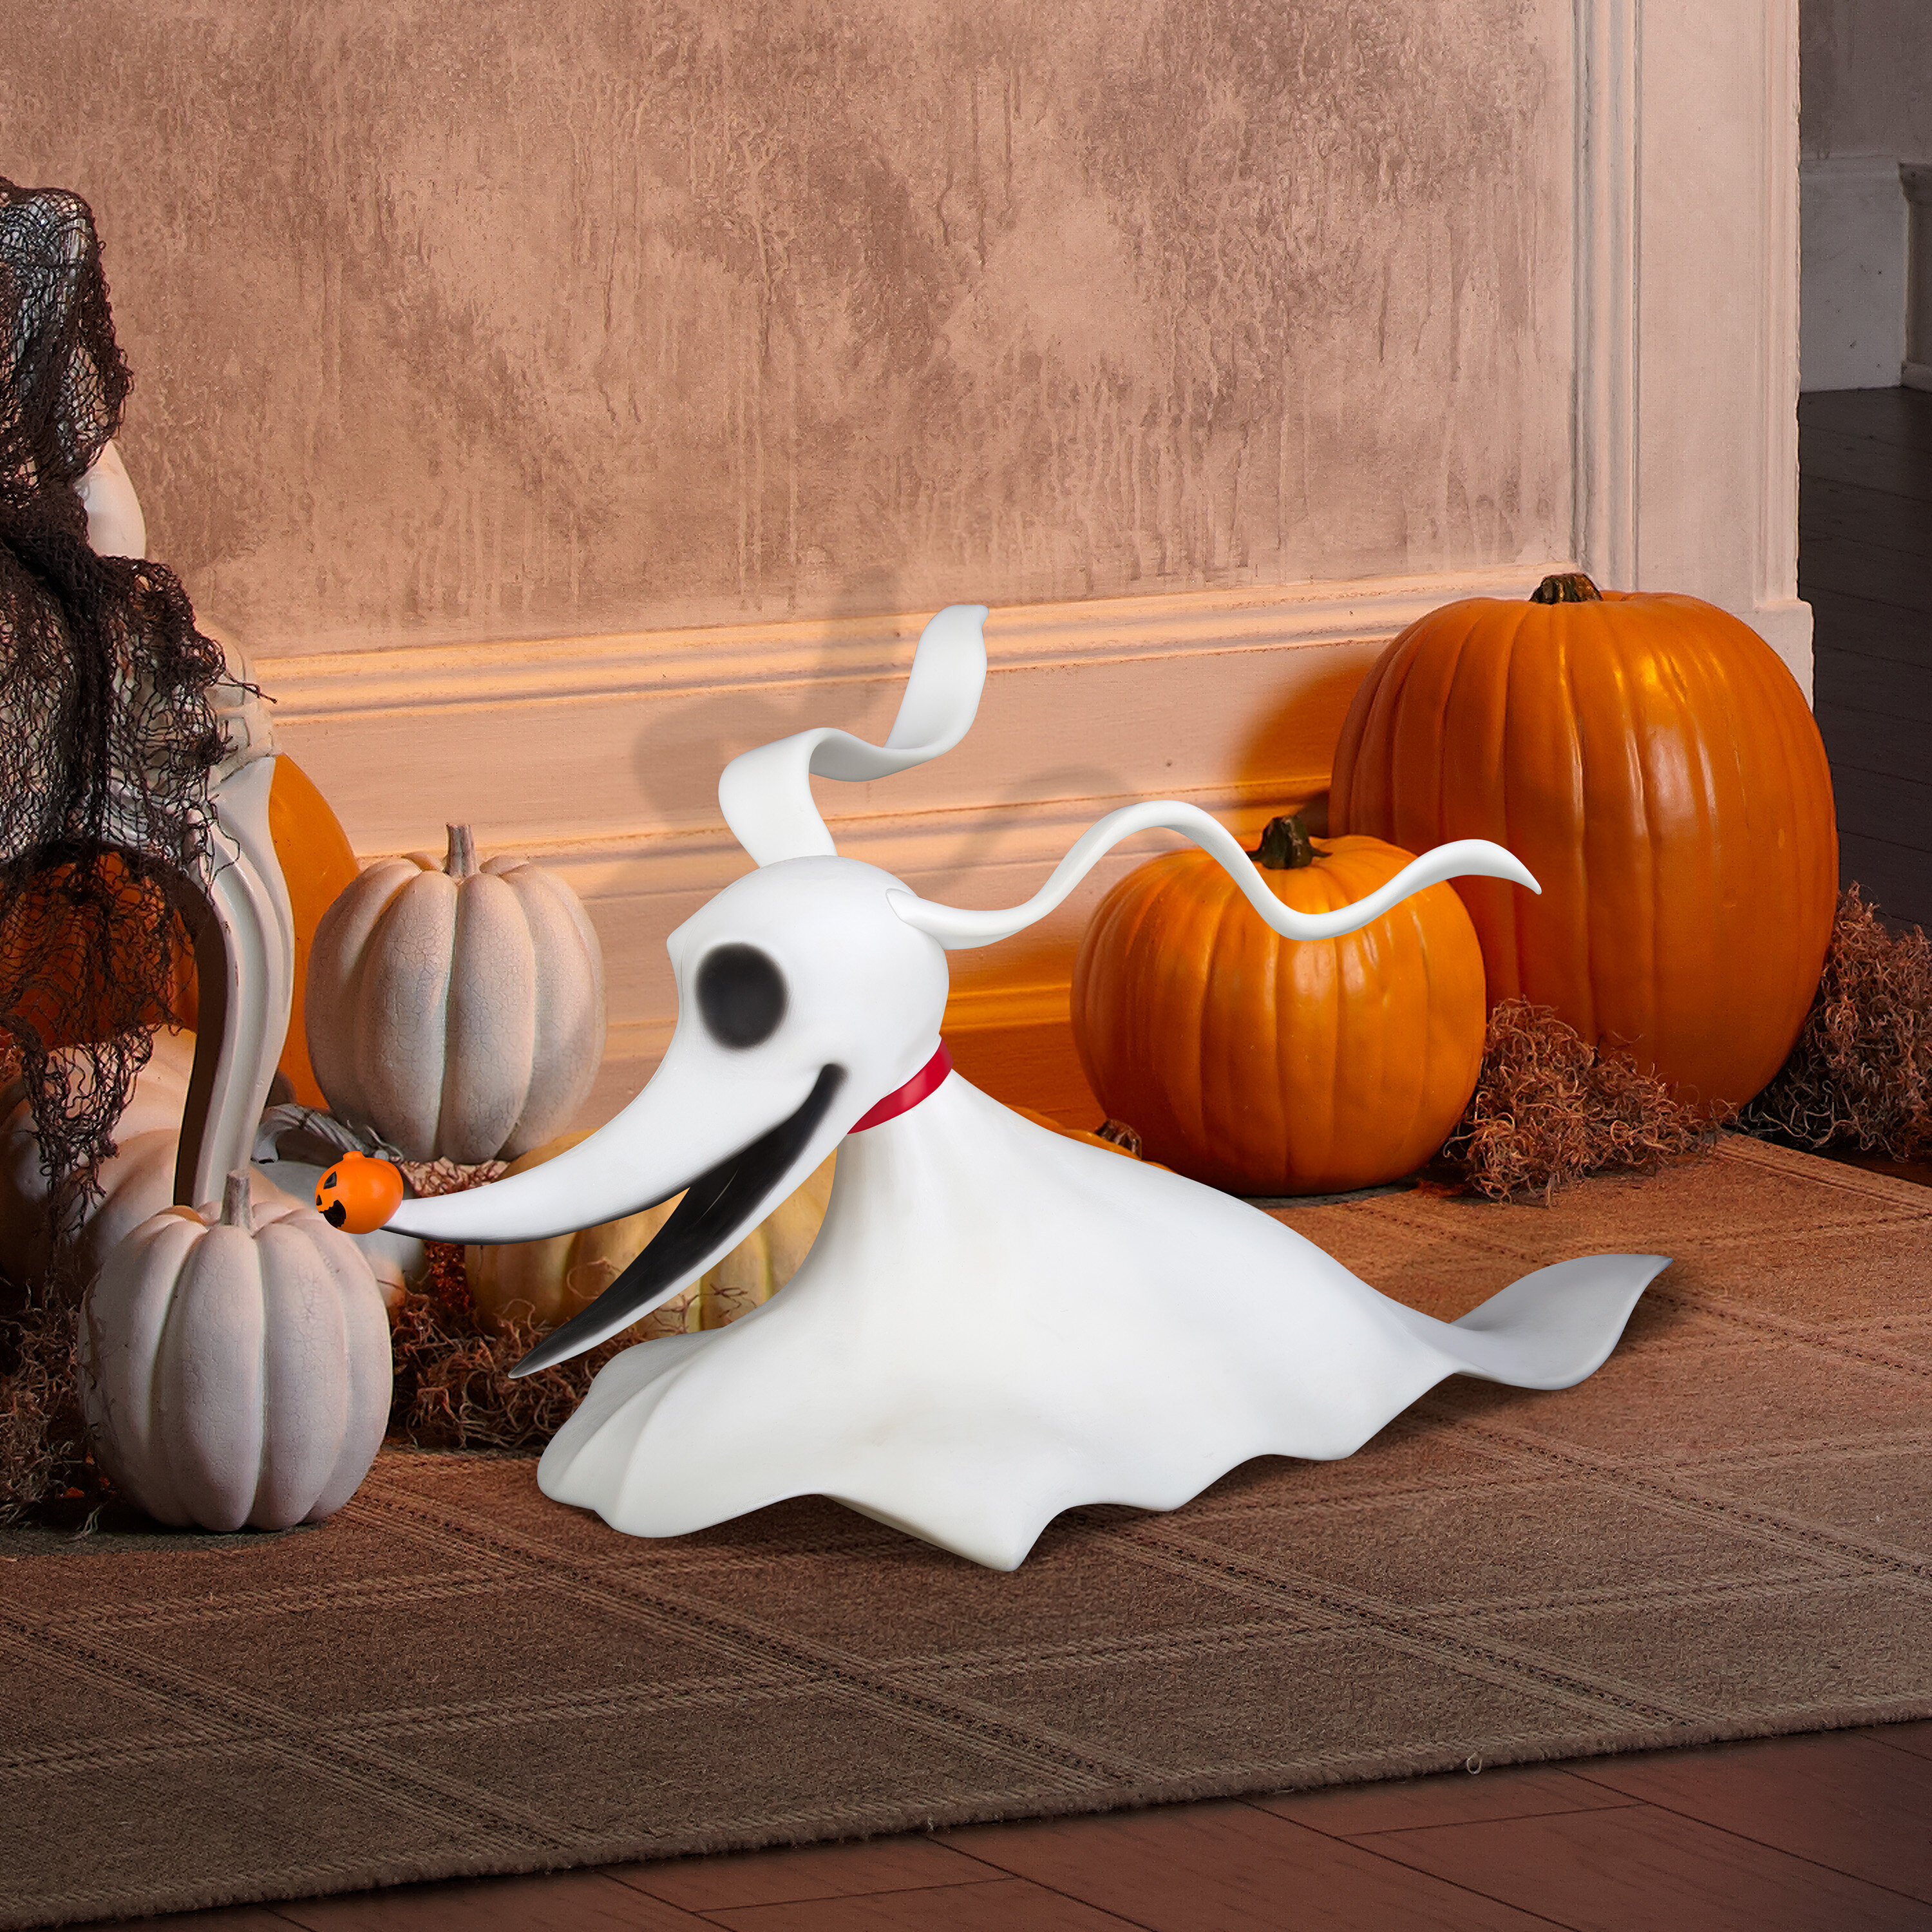 Conversation Concepts Halloween Border Terrier Statue Figurine and Spooky Pumpkin